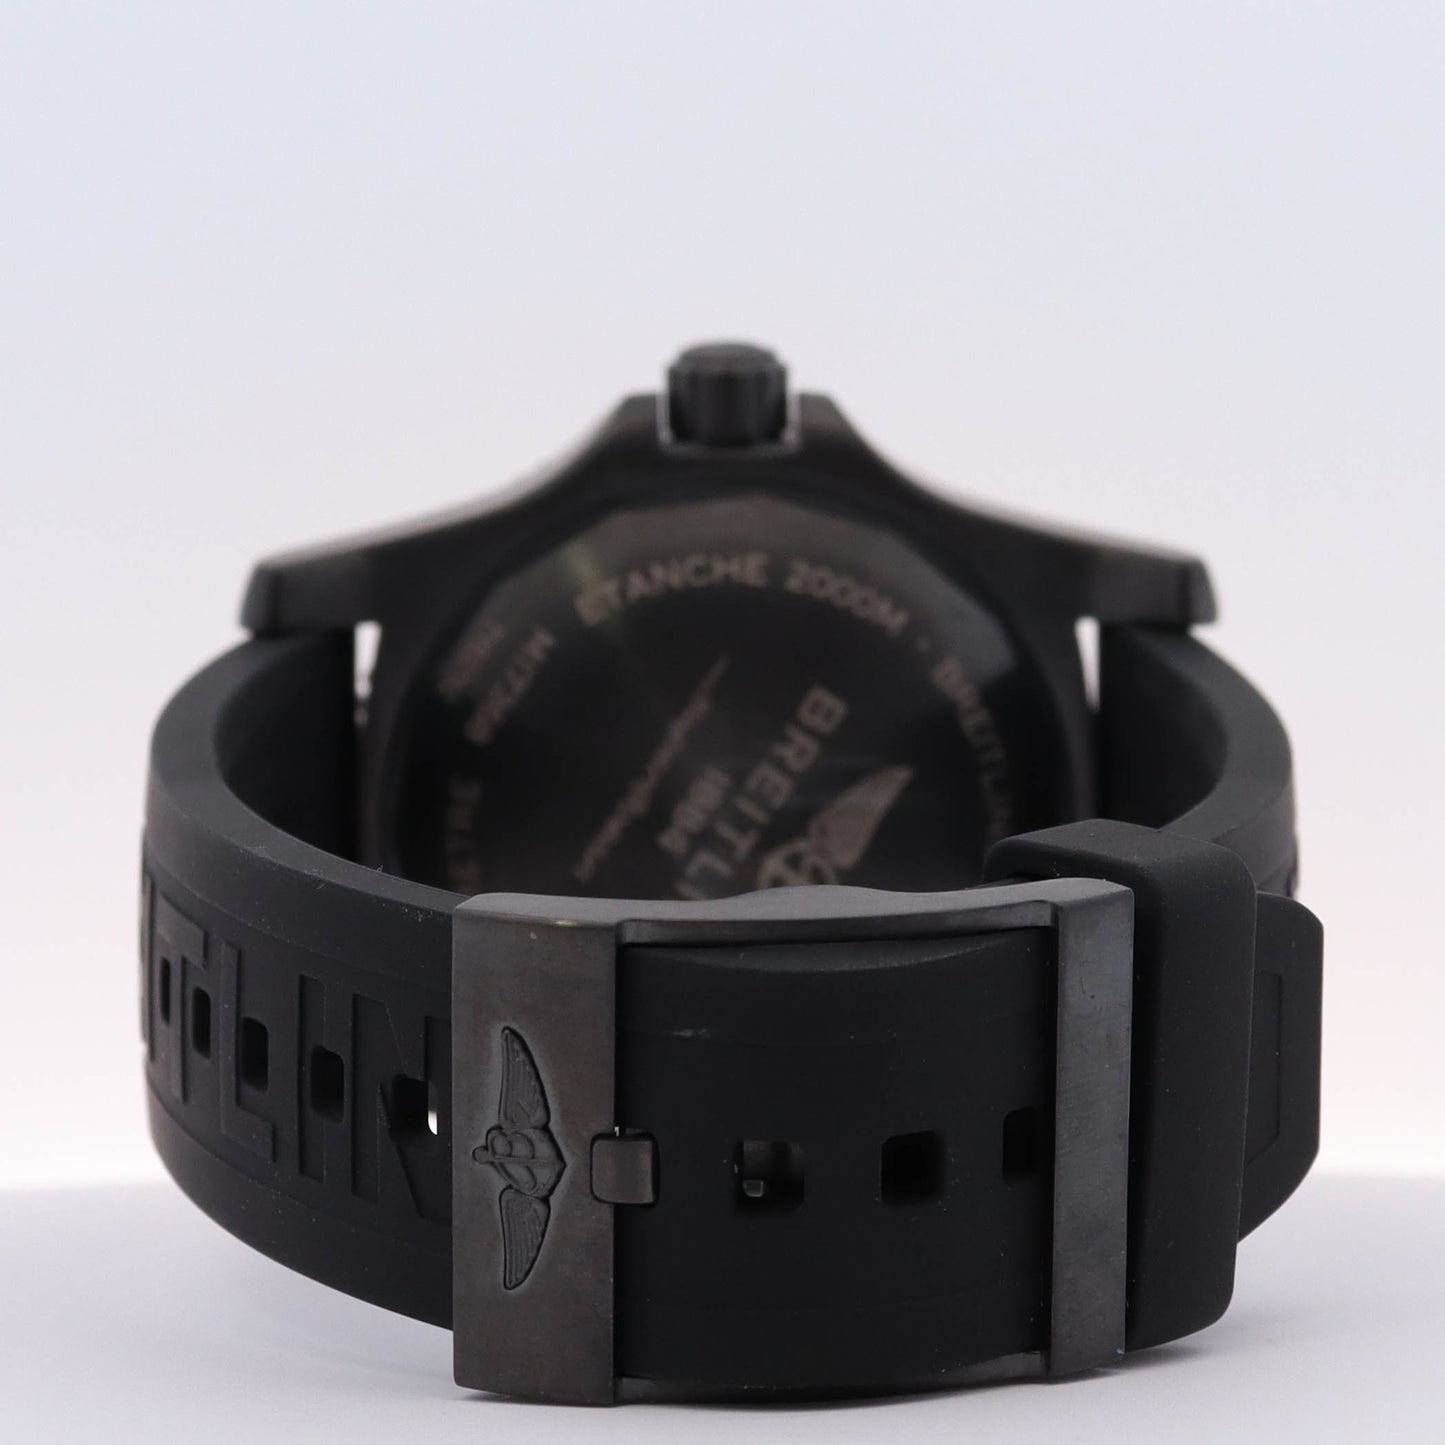 Breitling Super Ocean Blacksteel 46mm Yellow Roman & Stick Dial Watch Reference#: M17368D71I1S1 - Happy Jewelers Fine Jewelry Lifetime Warranty